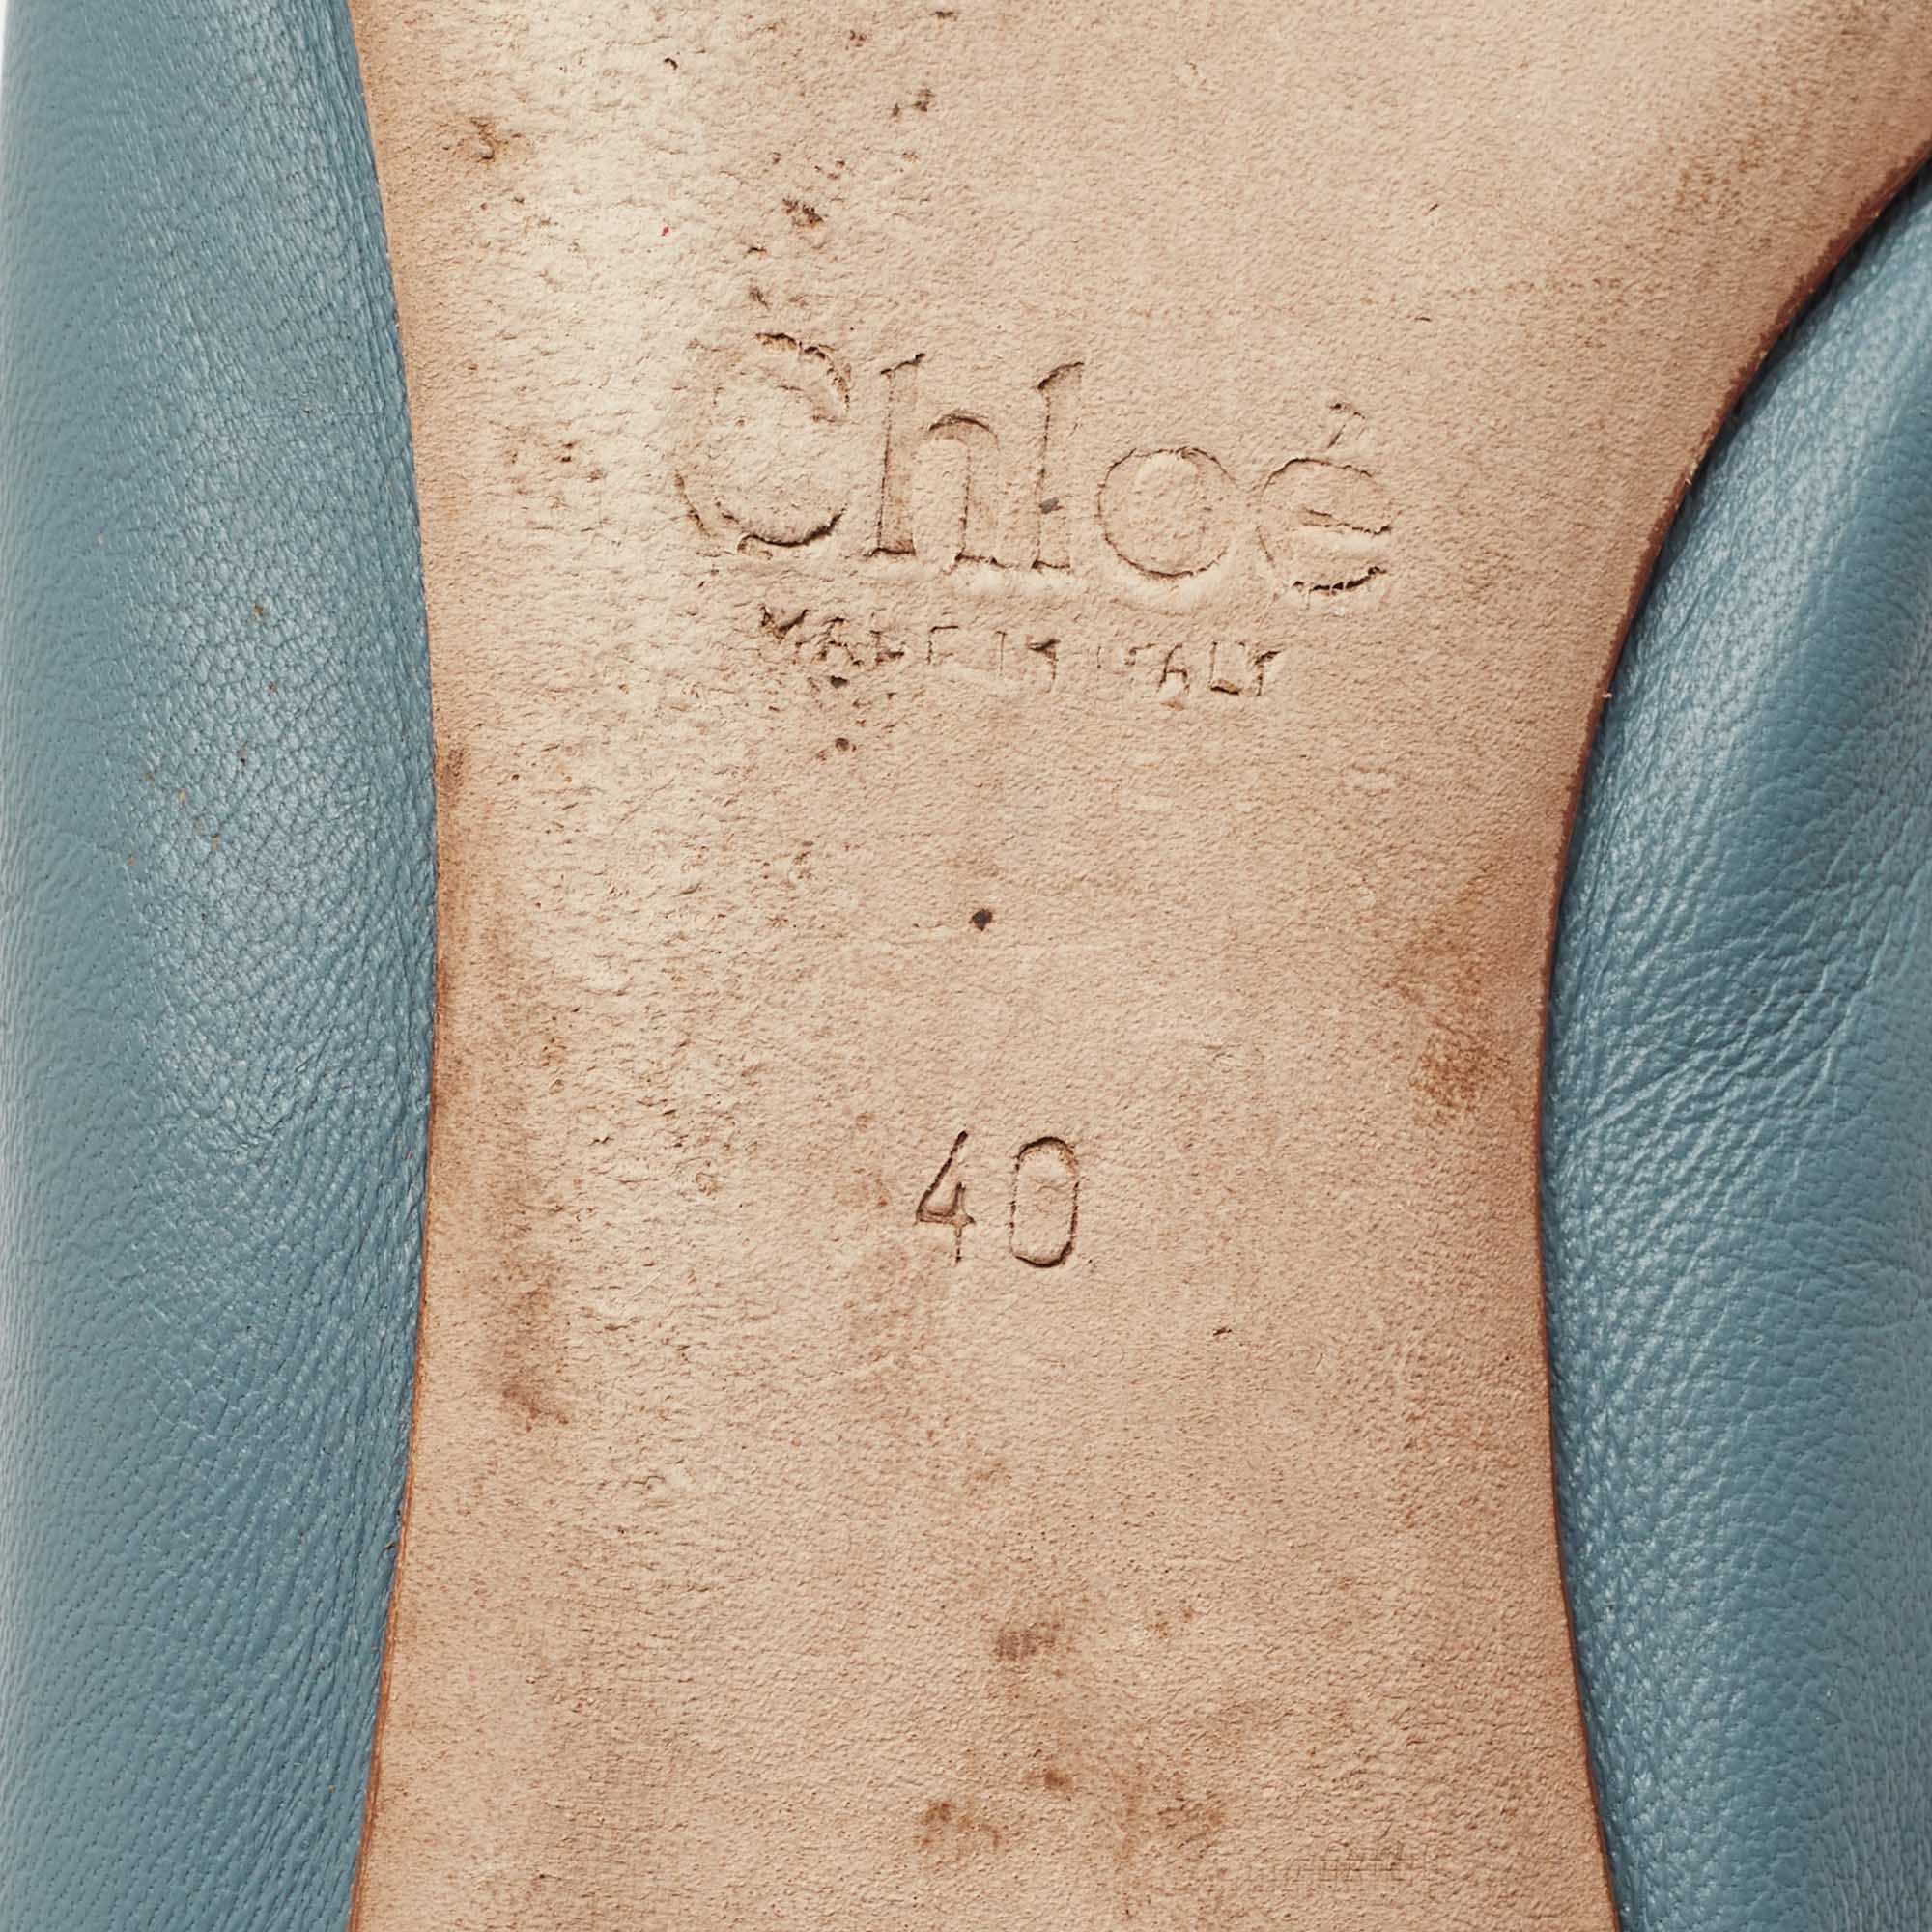 Chloe Blue Scalloped Leather Lauren Ballet Flats Size 40